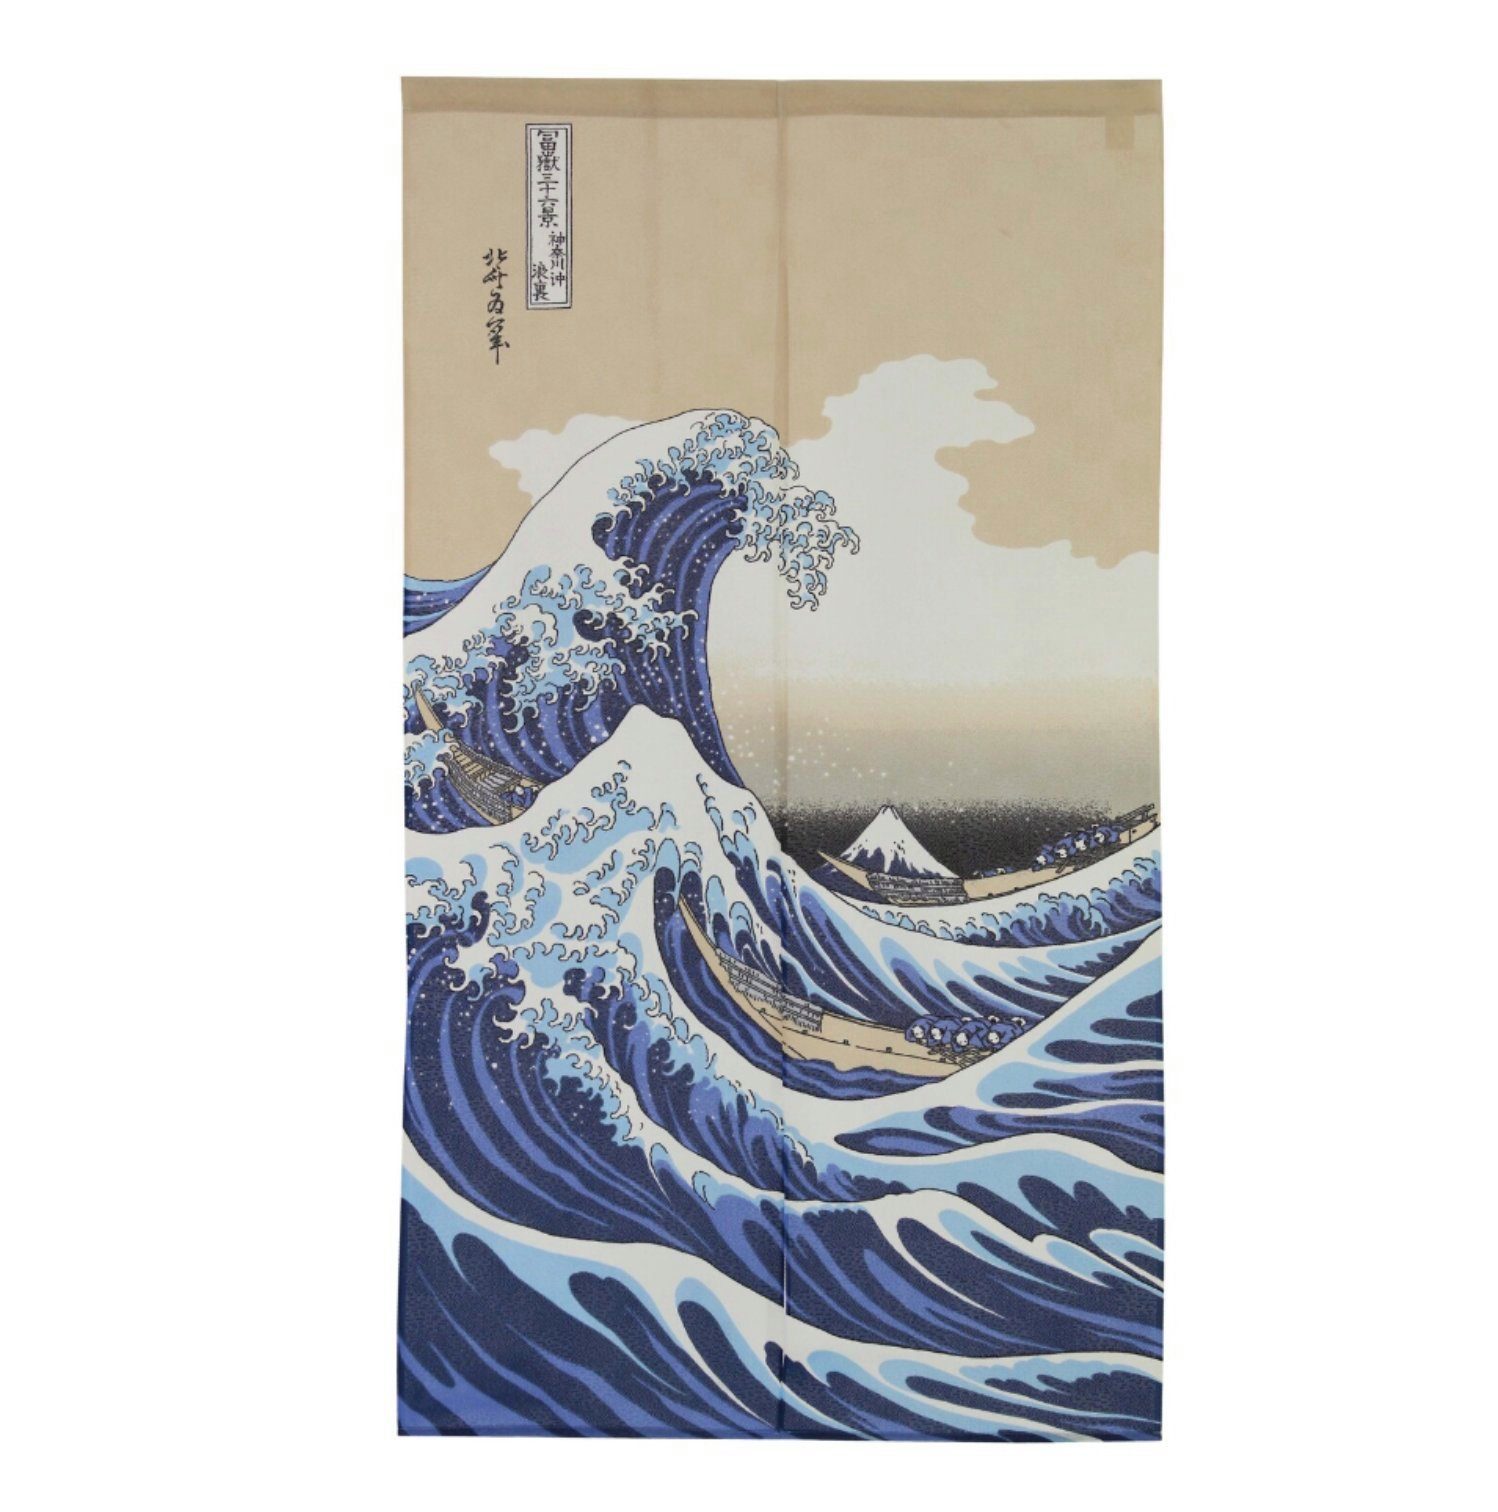 Vorhang Noren Vorhang Tapestry von Made Hokusai Great Narumi The Japan, Wave in